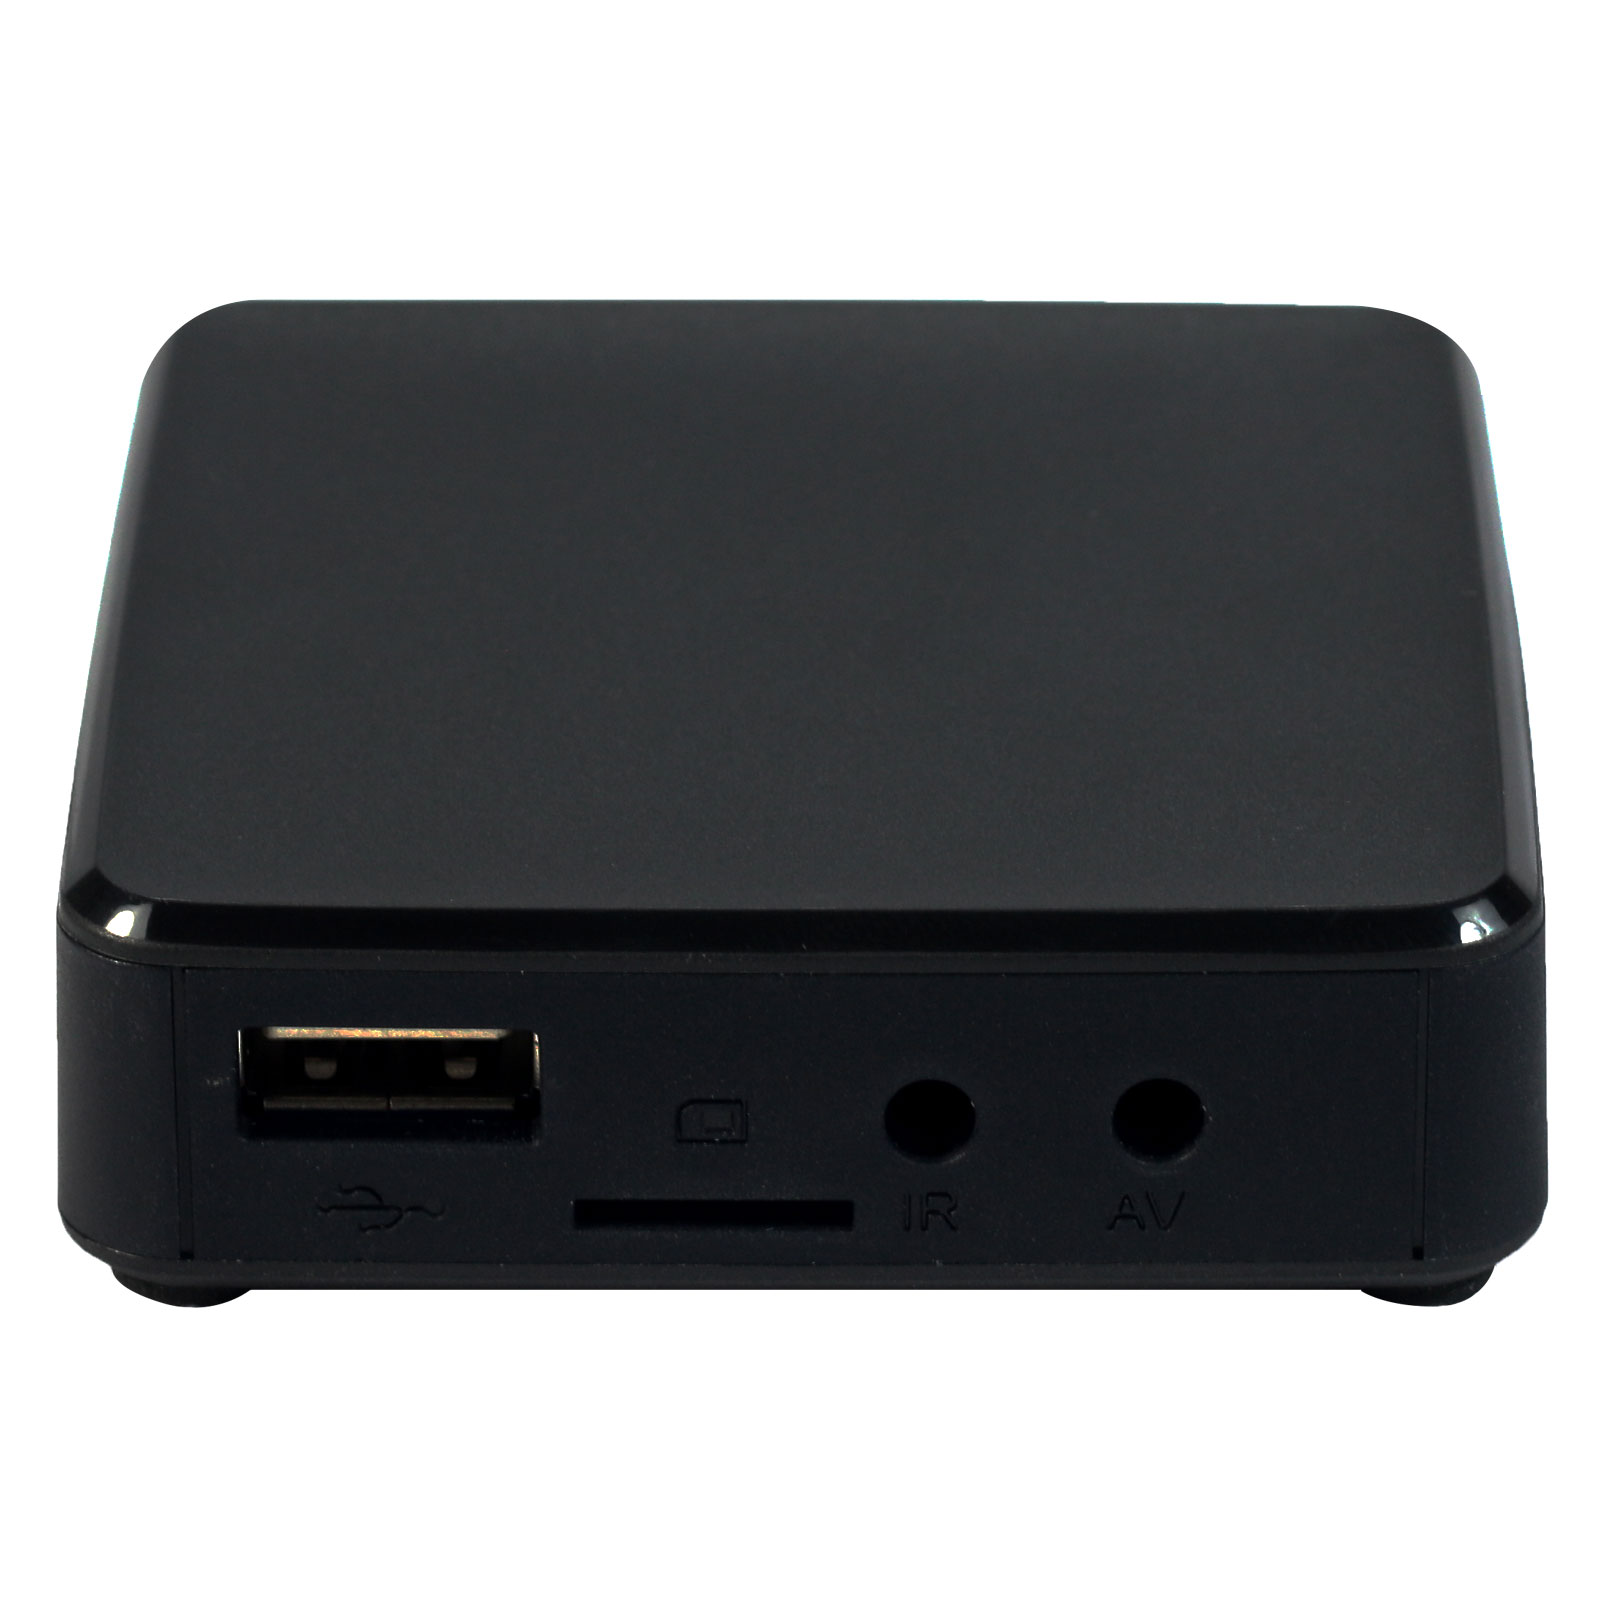 TVIP S-Box v.610 Internet TV 4K Ultra HD HEVC UHD Android 8.0 Linux Multimedia IP Box